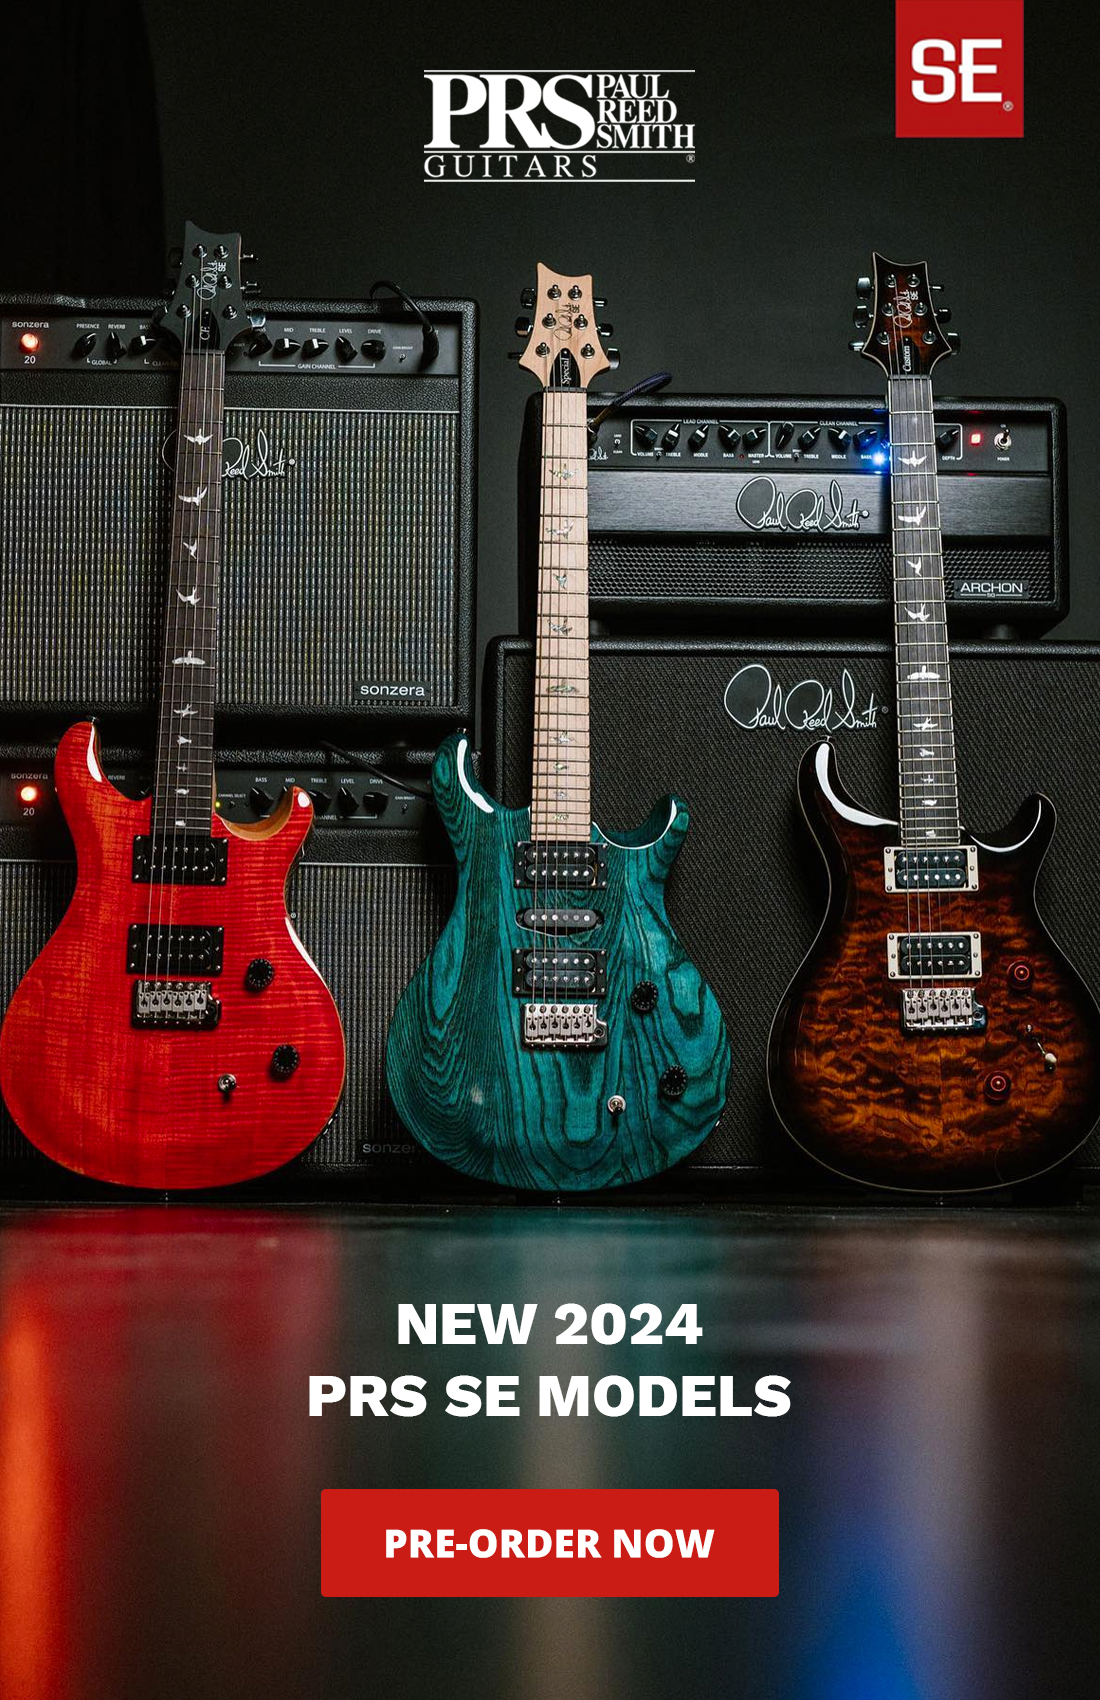 Brand new 2024 PRS SE Models